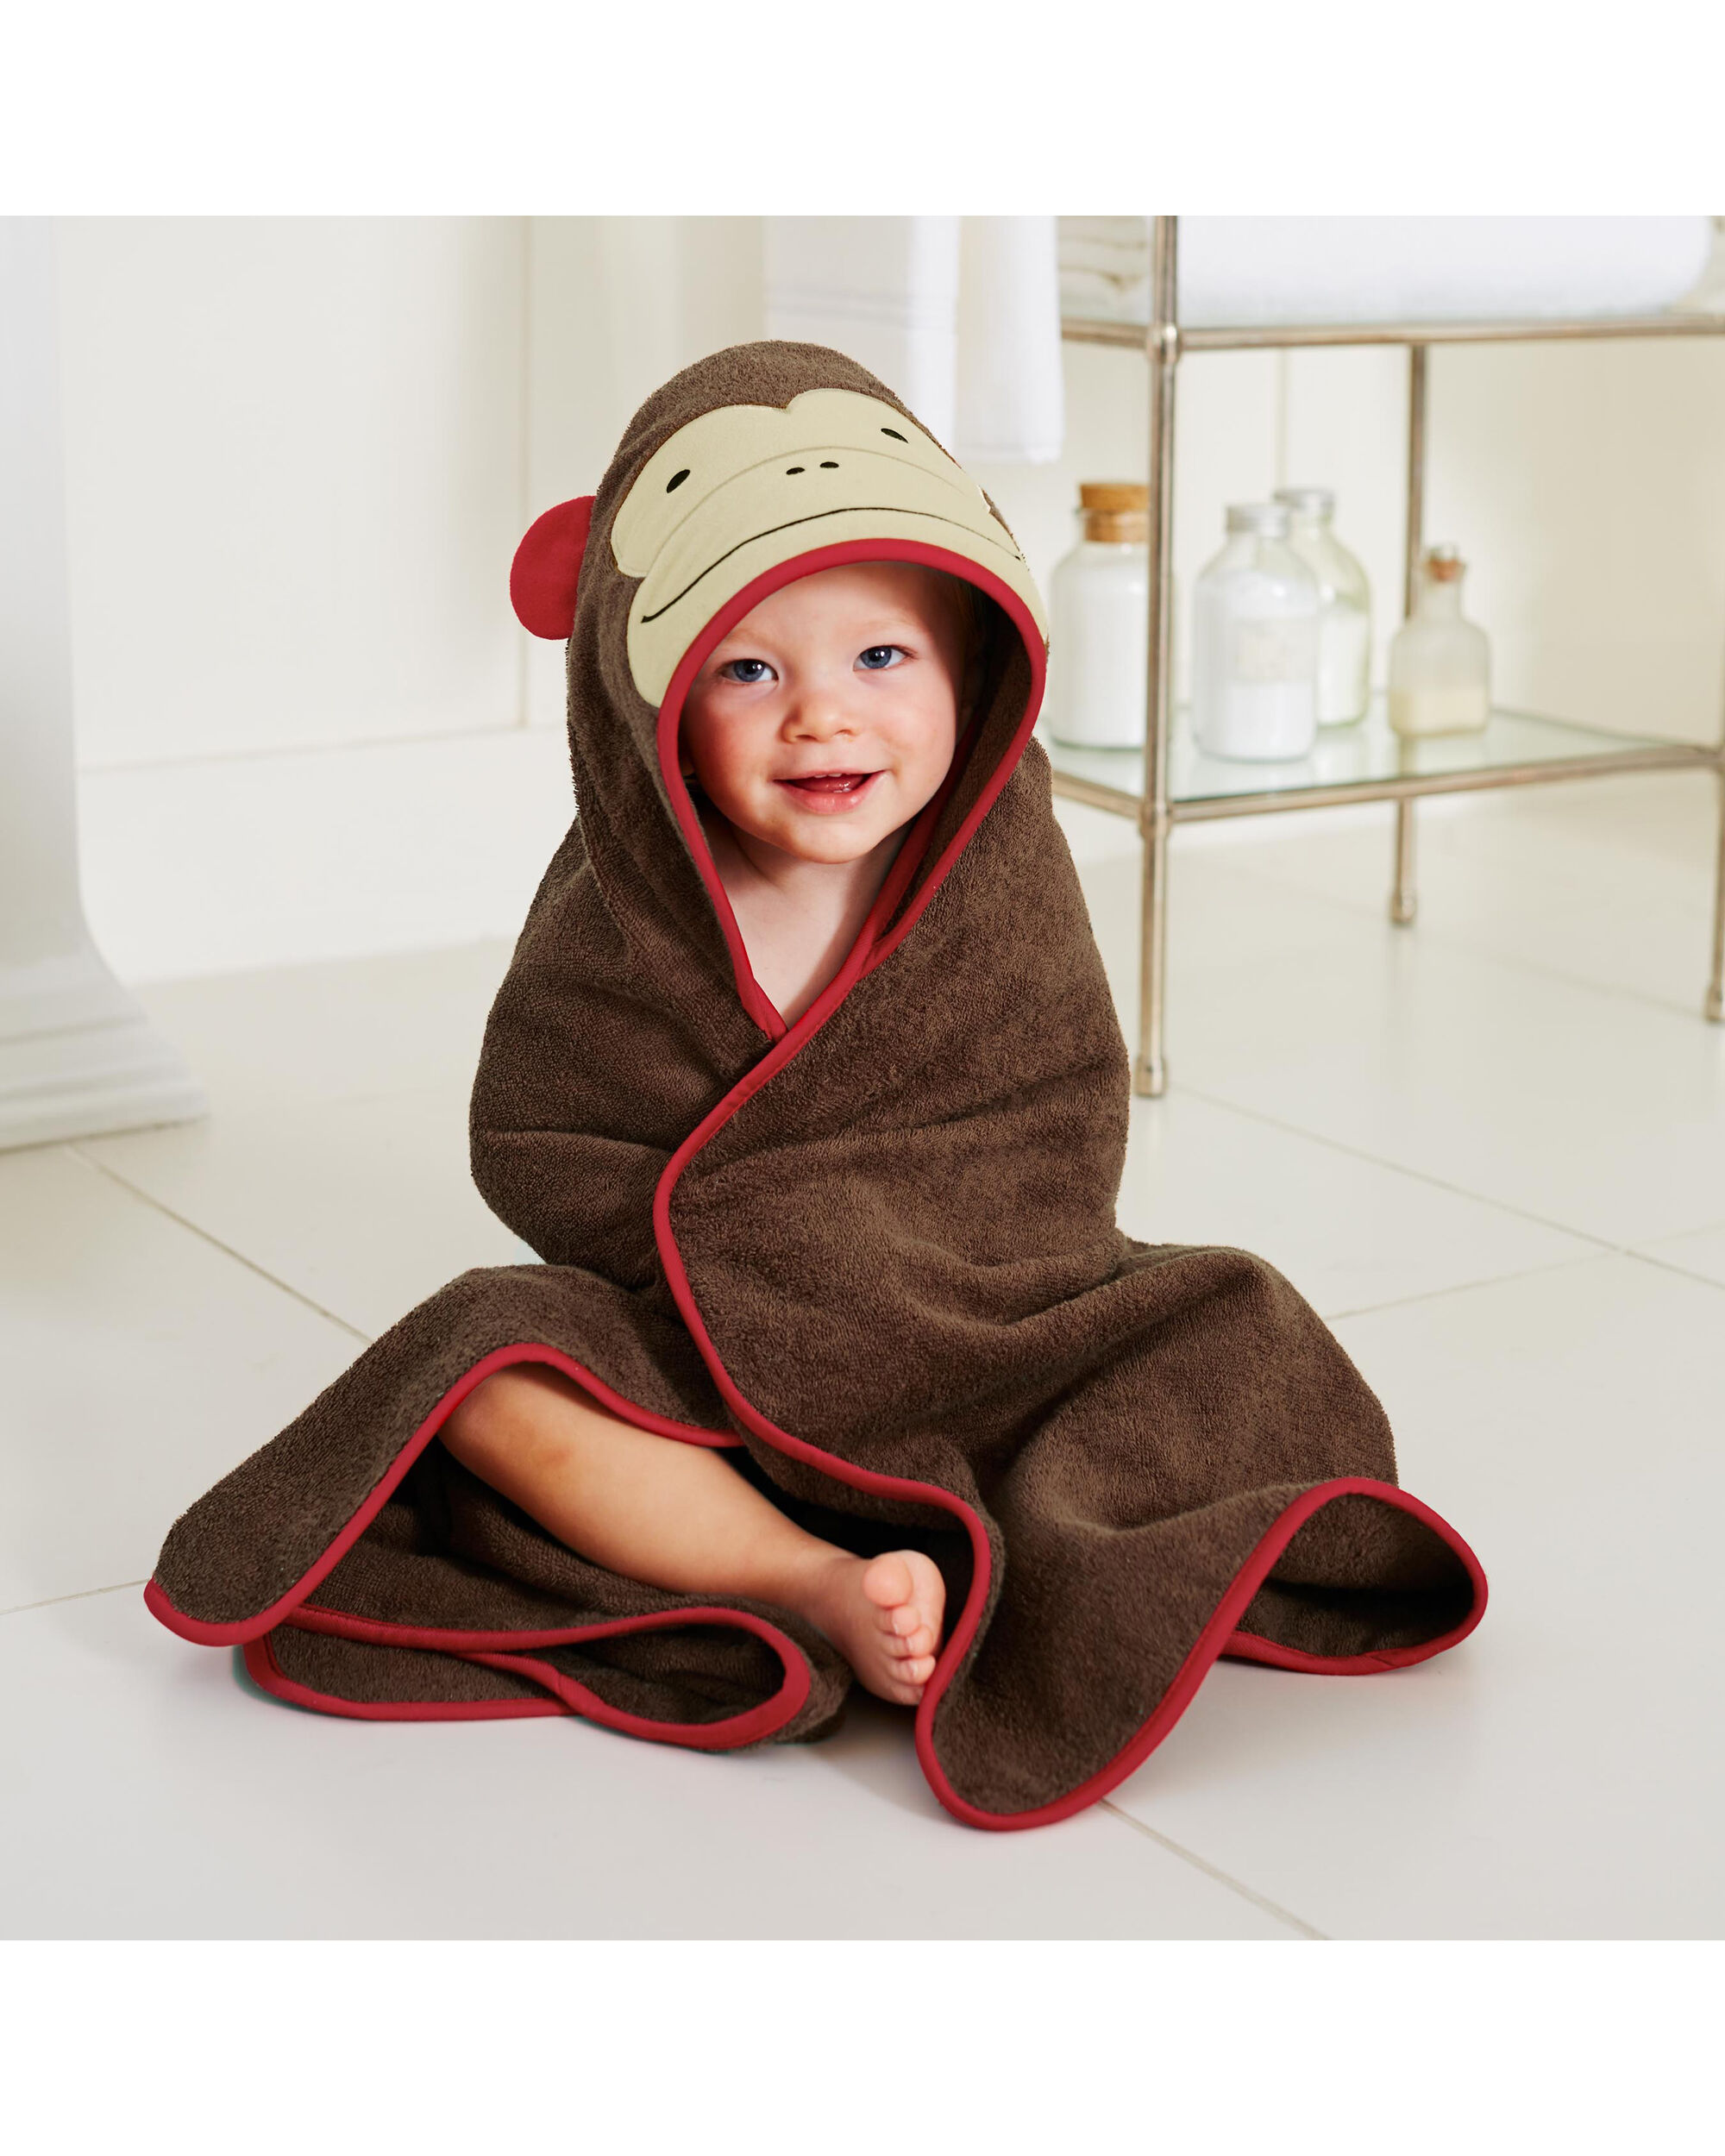 Skip Hop ZOO HOODED TOWEL Baby/Toddler/Children Bath Towel Animals  BNIP 